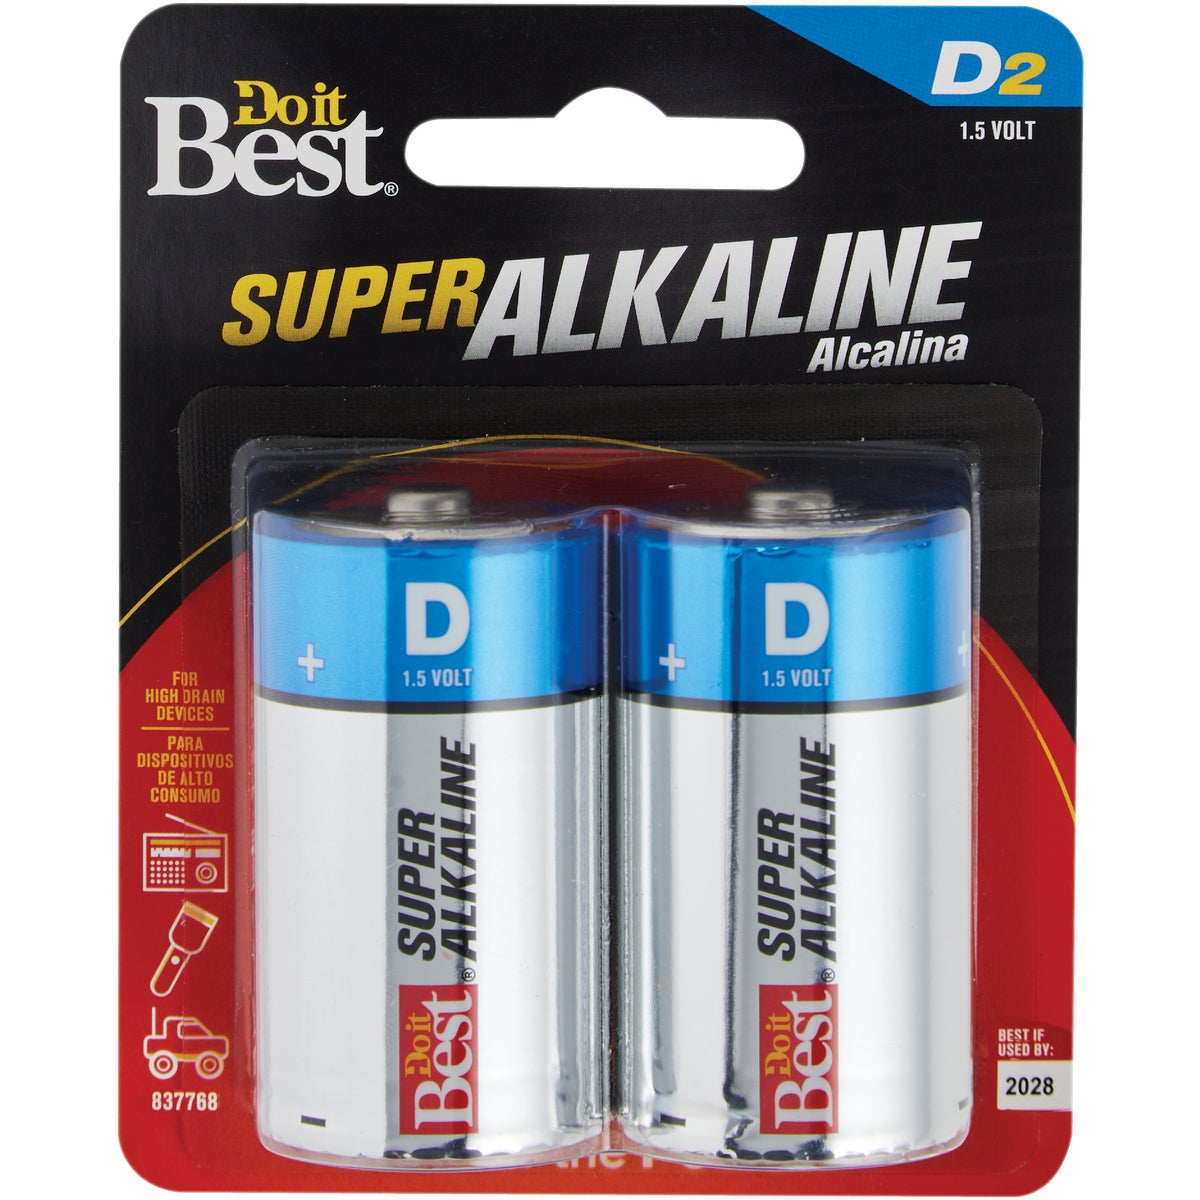 Item 837768, Top-quality D super alkaline batteries.